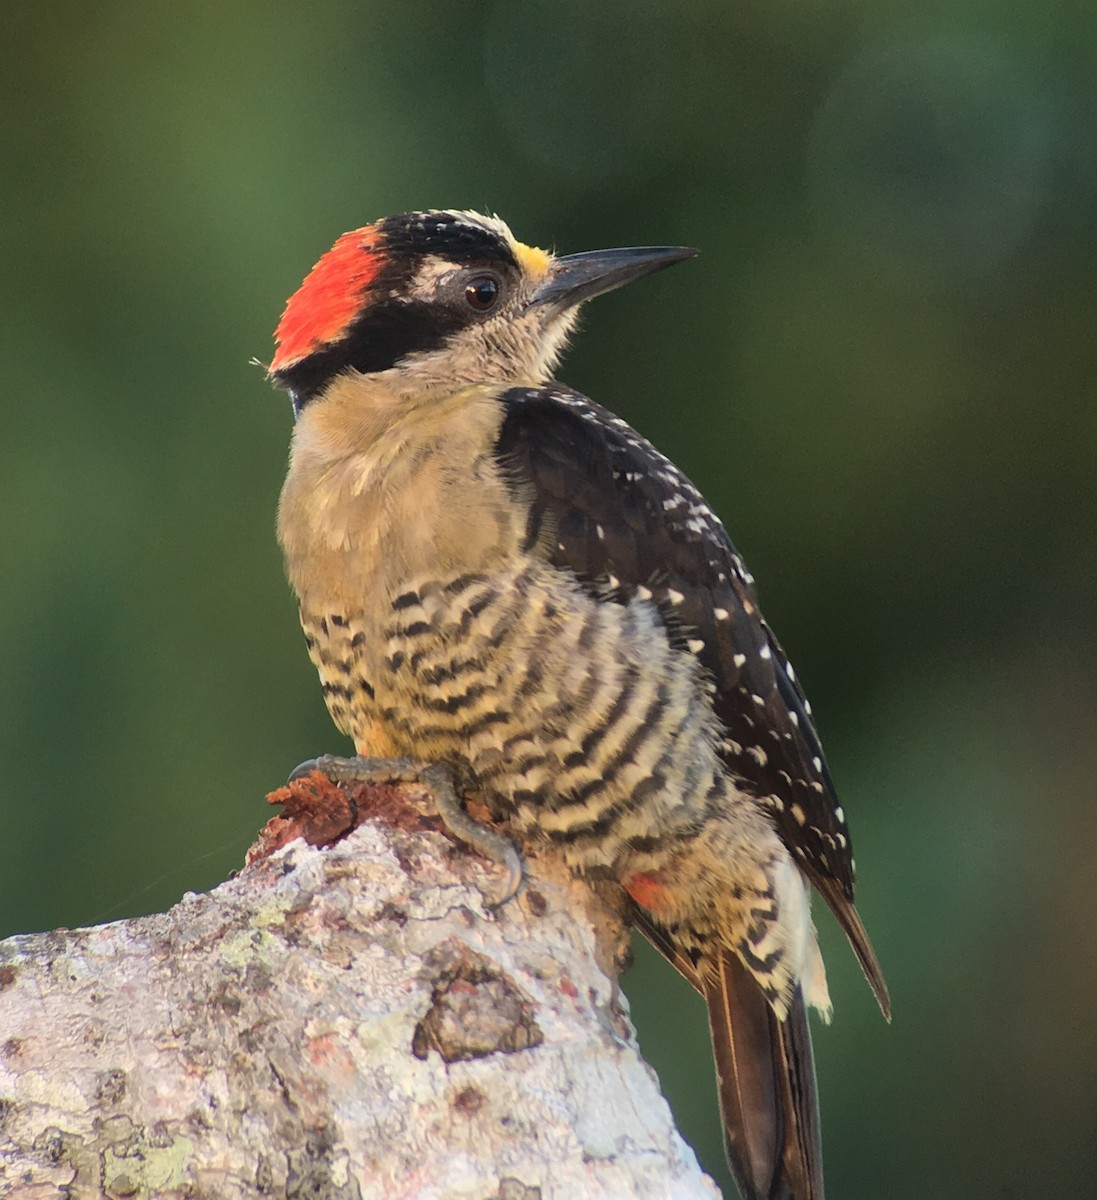 Black-cheeked Woodpecker - Domiciano Alveo - www.whitehawkbirding.com